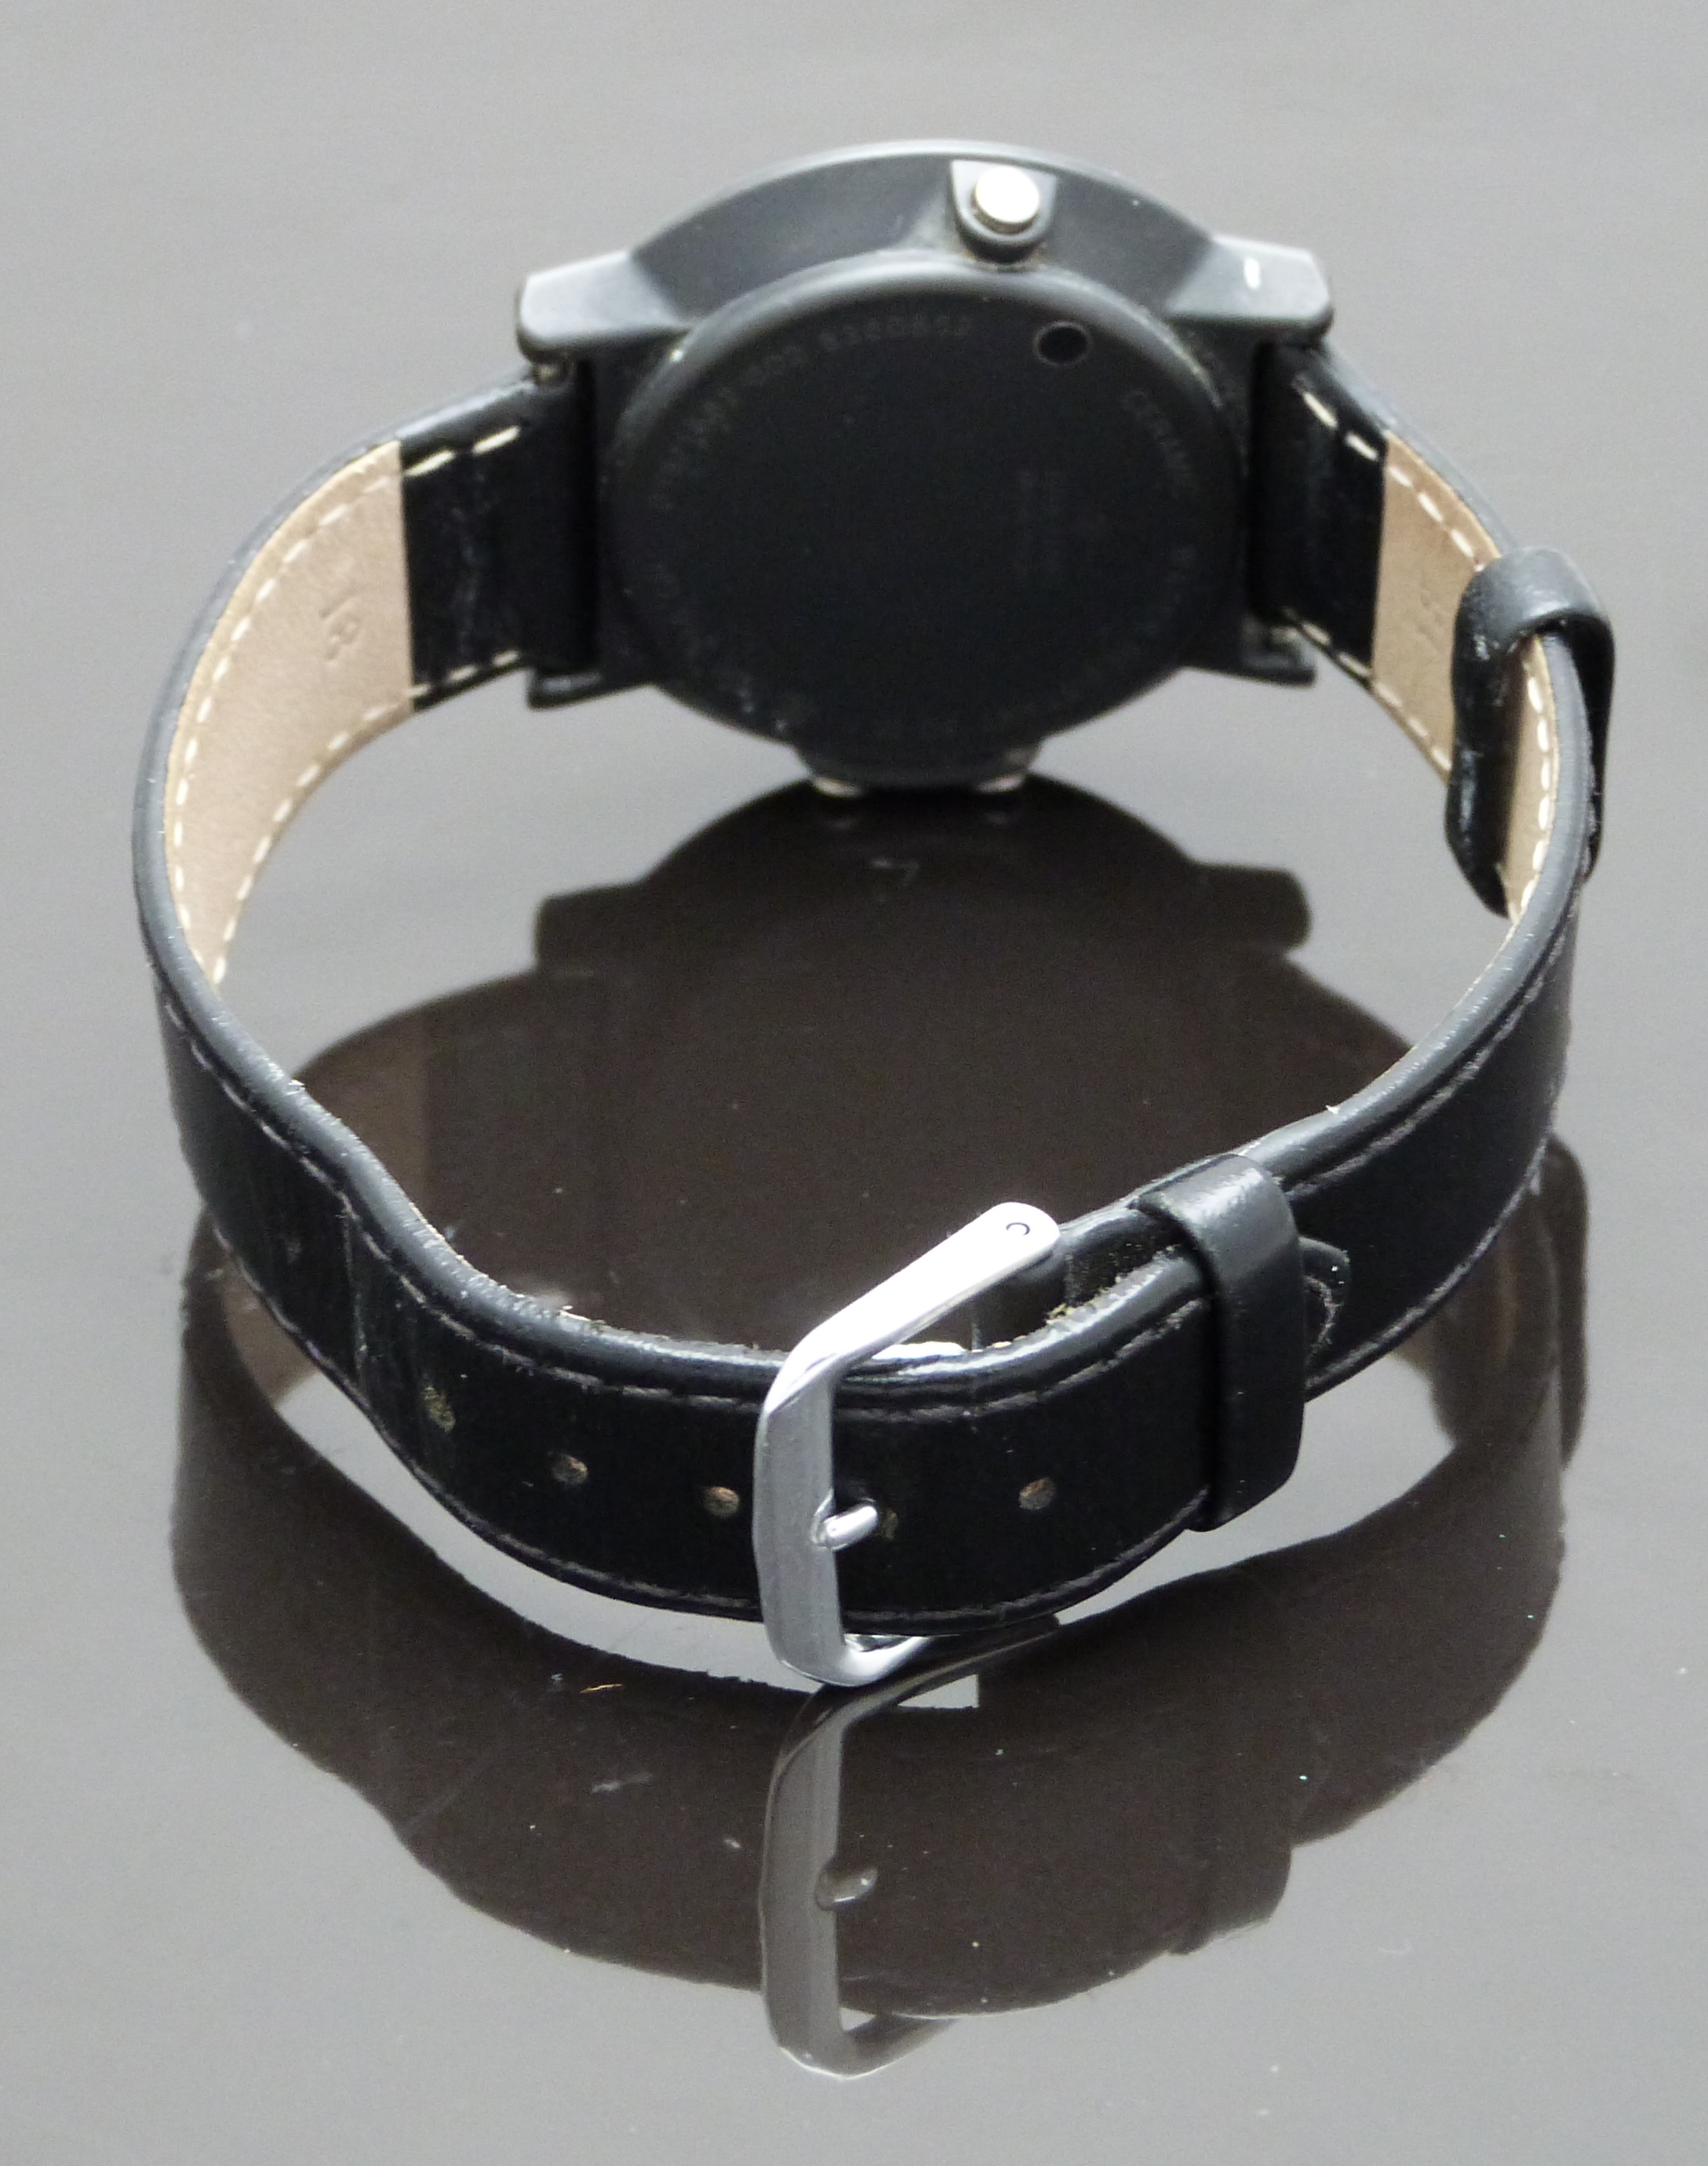 Junghans Mega Solar gentleman's wristwatch with stainless steel hands, silver inner bezel, digital - Image 3 of 4